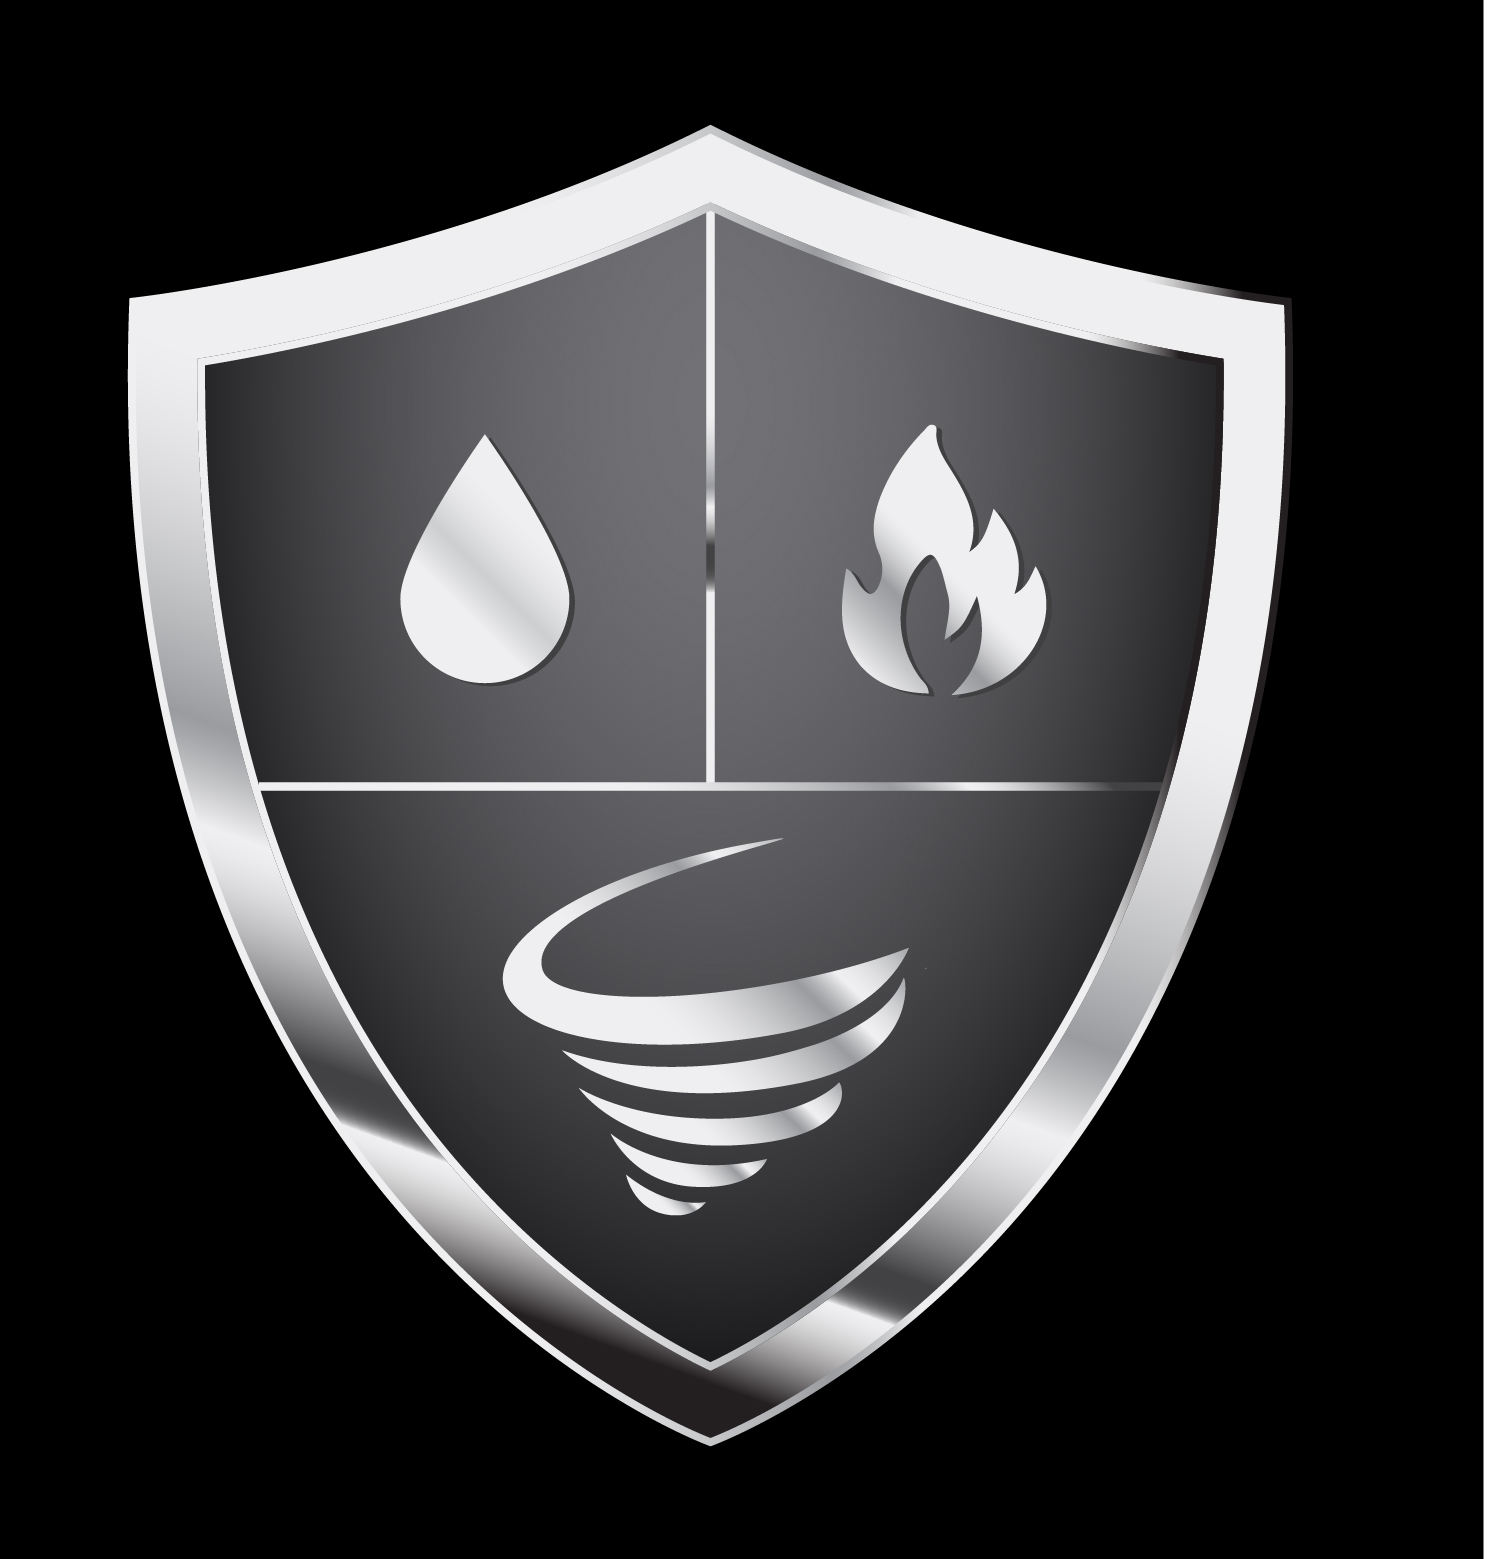 Shield Restoration Services's logo